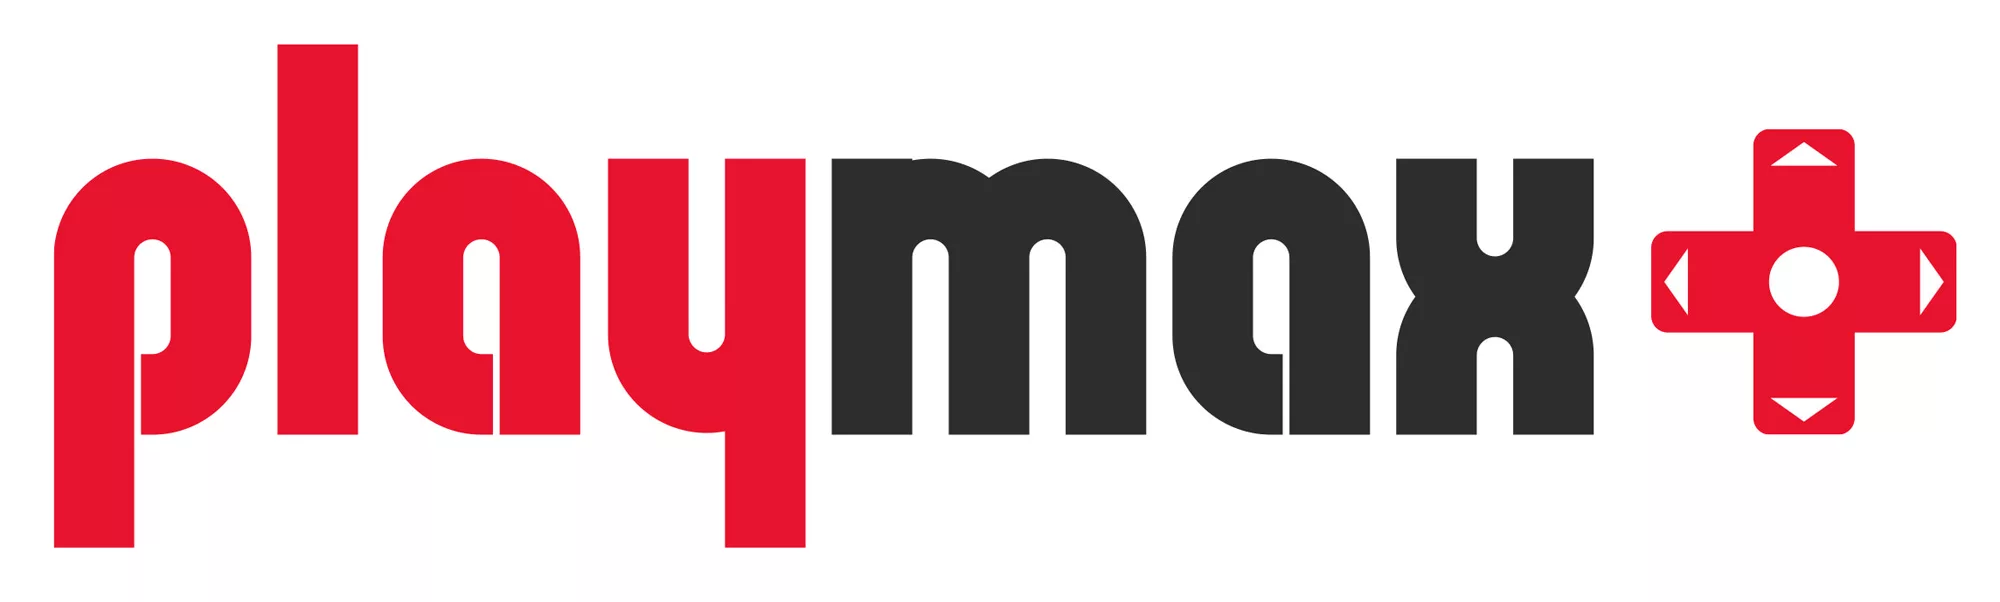 Playmax logo jpg